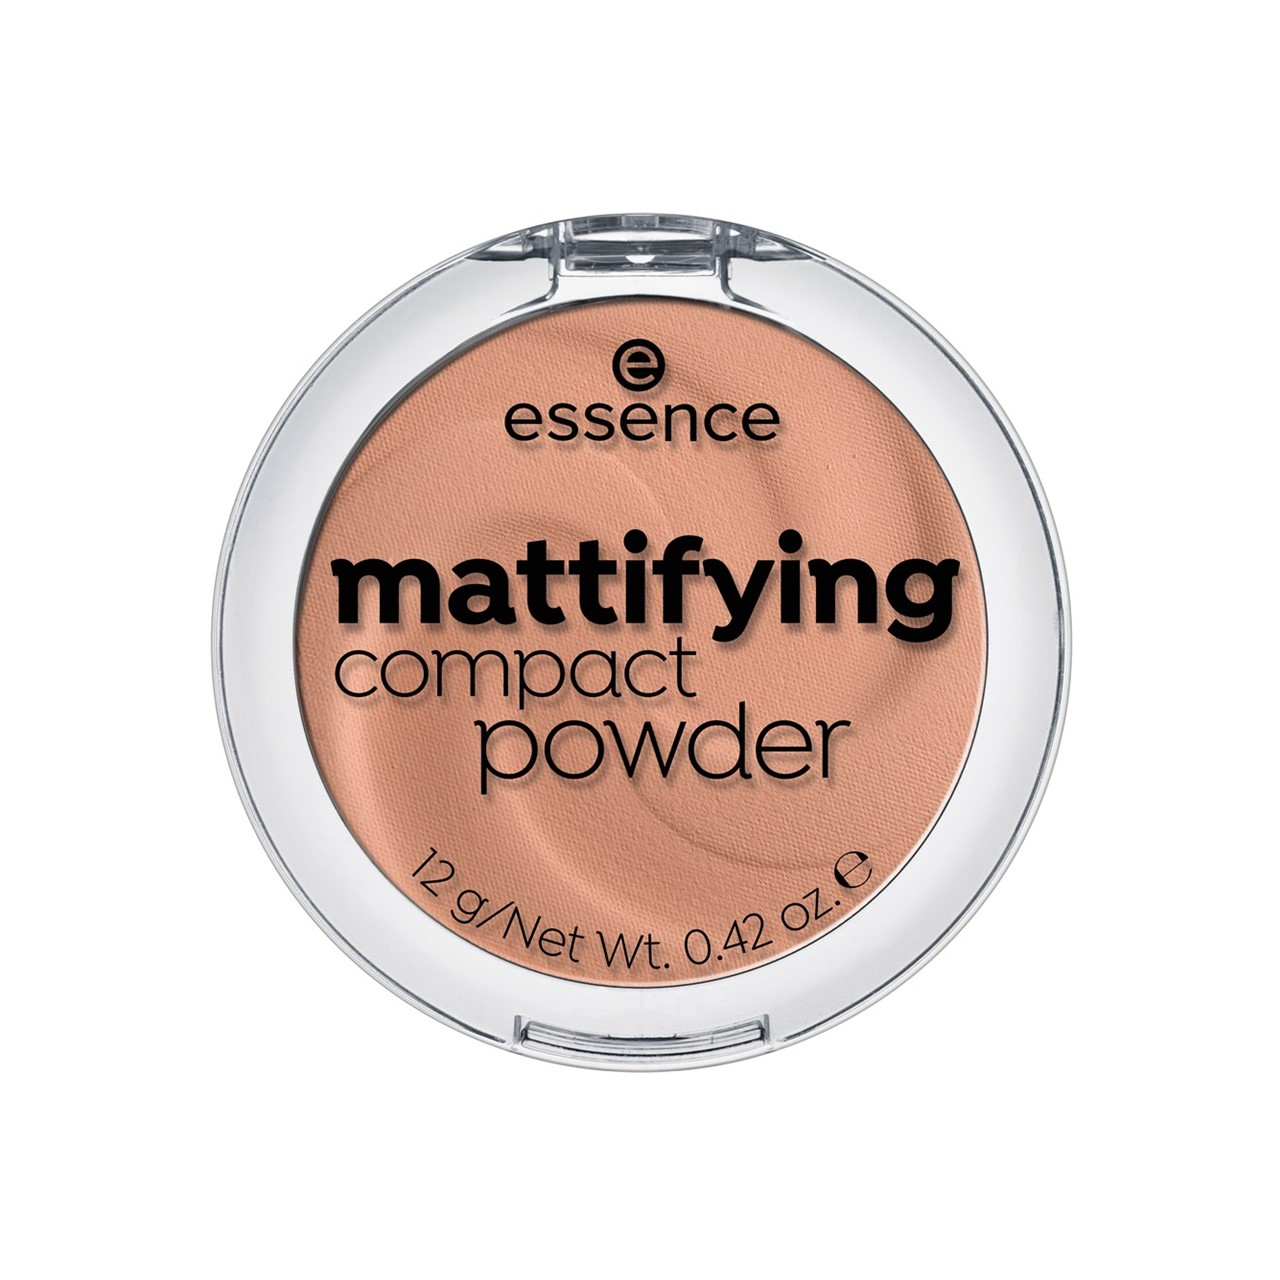 essence Mattifying Compact Powder 02 Soft Beige 12g (0.42oz)